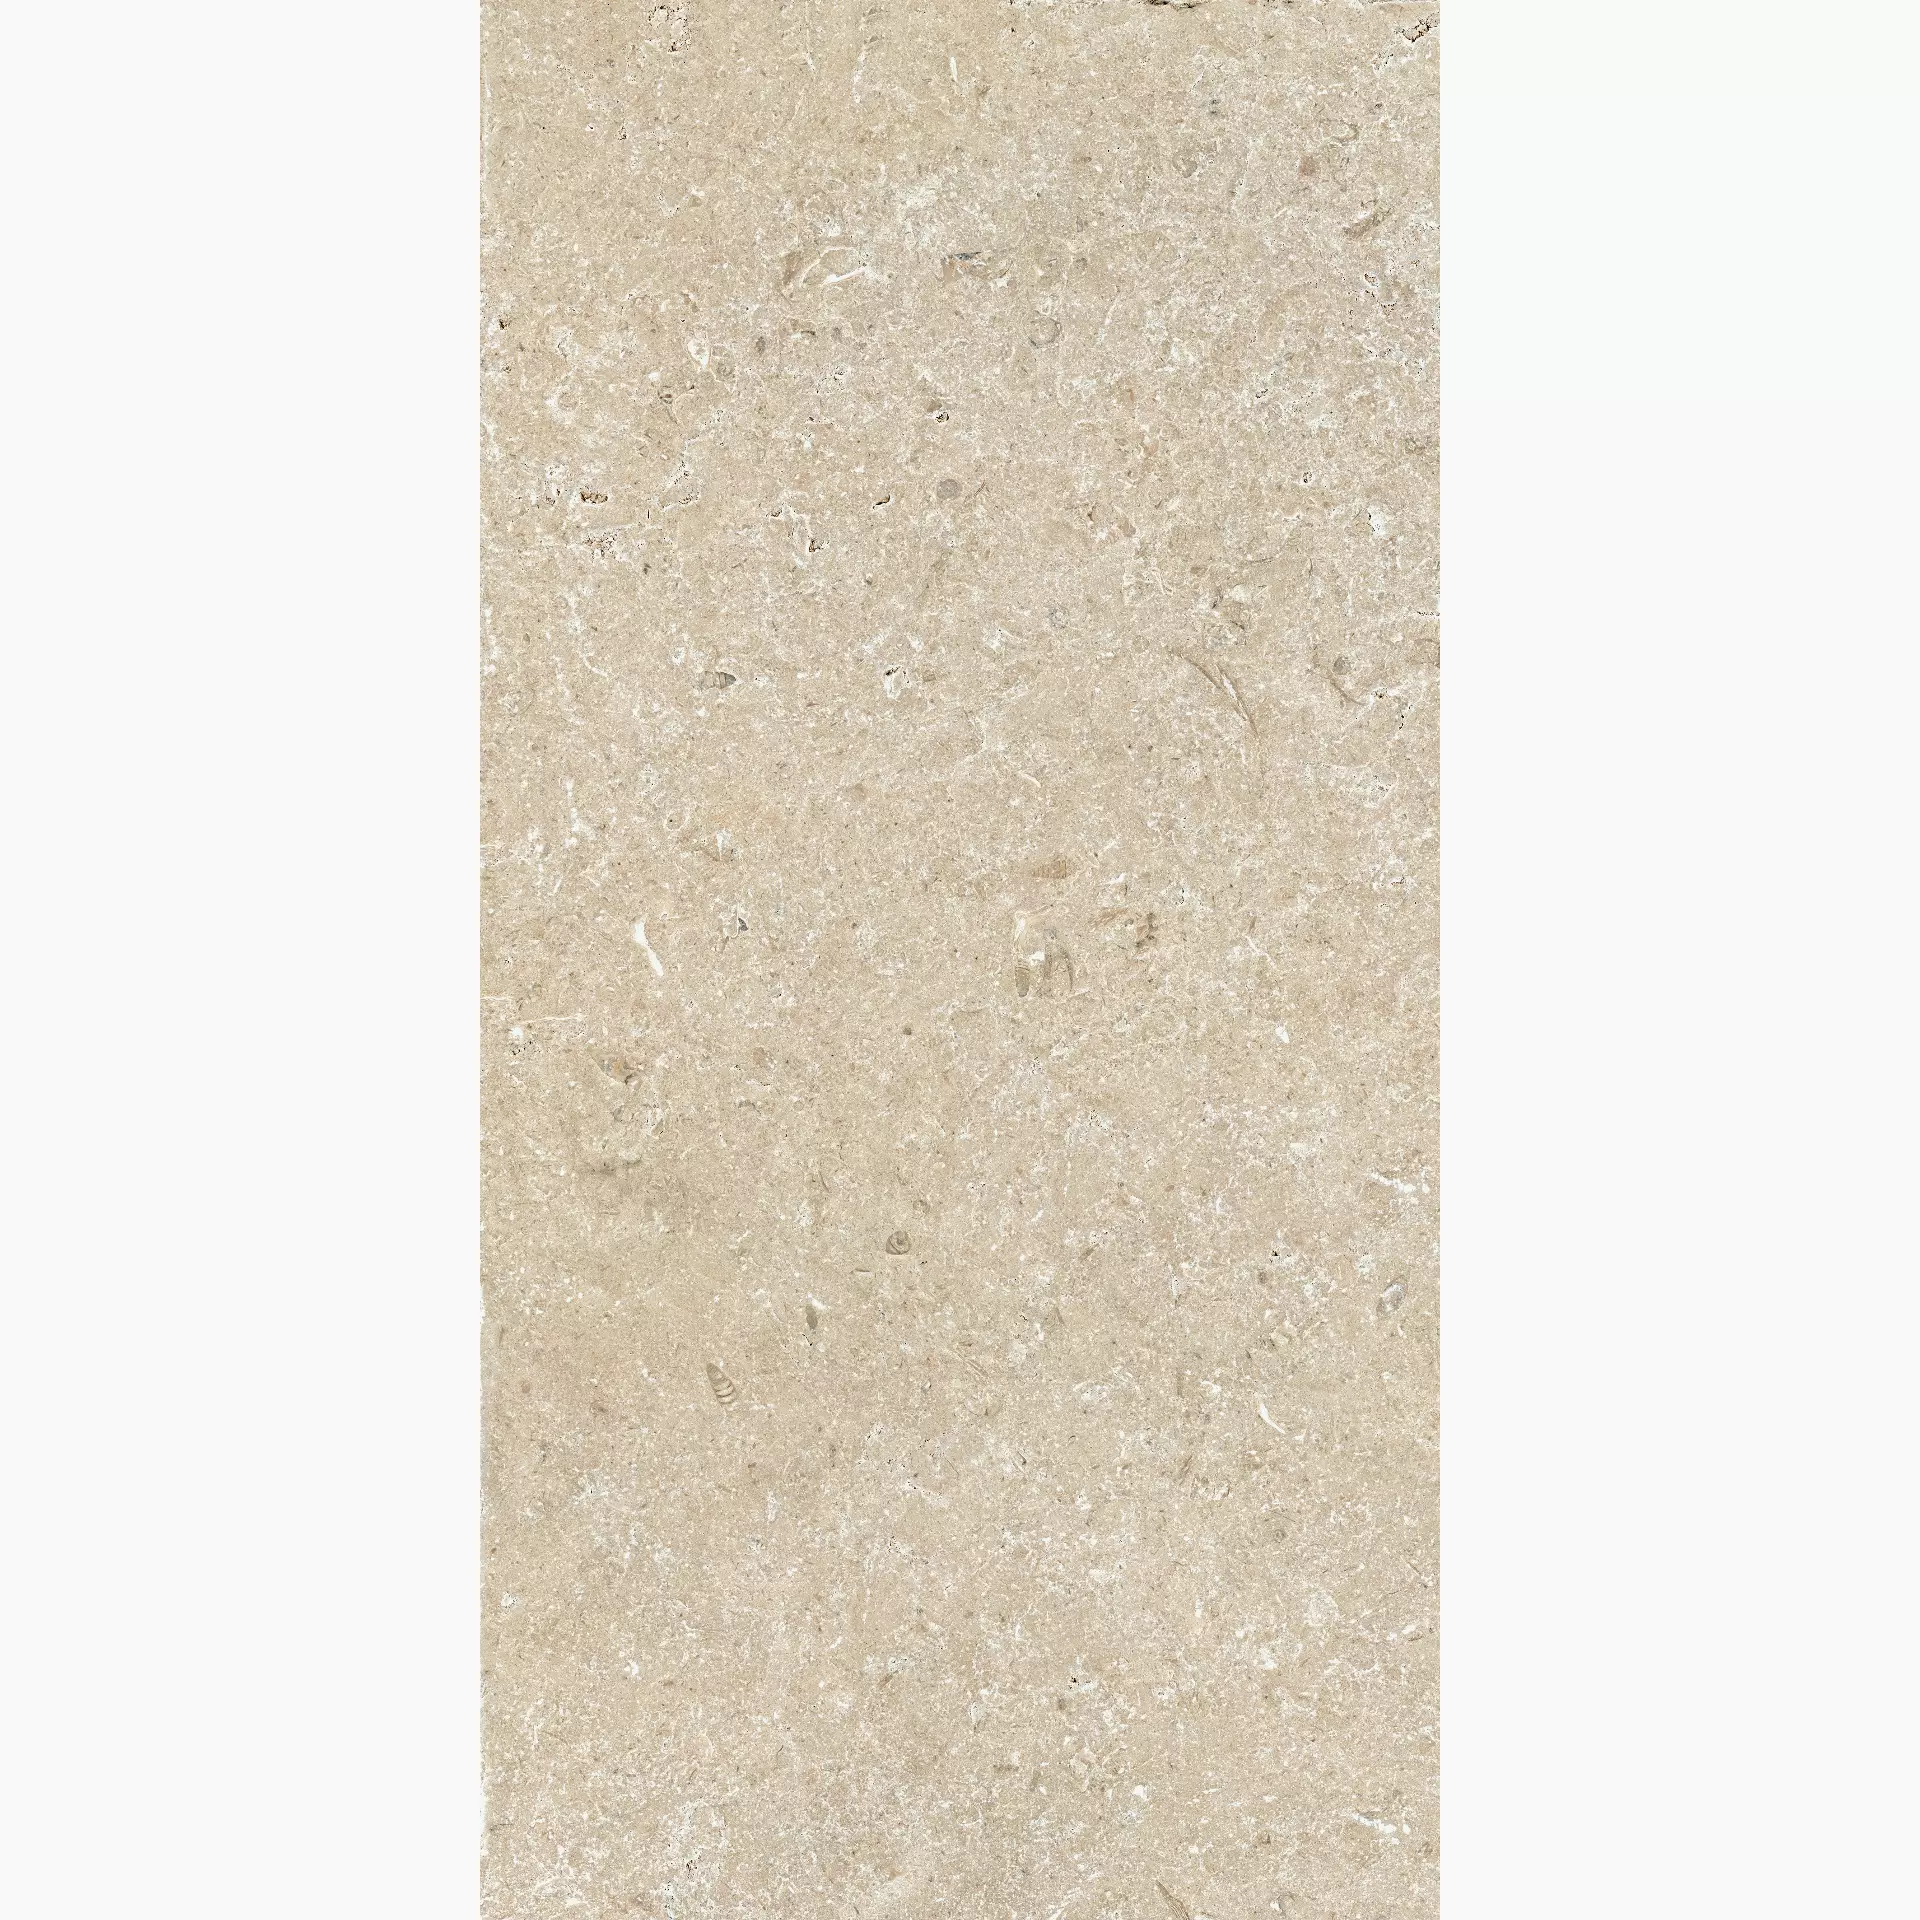 Cottodeste Secret Stone Precious Beige Naturale Protect Precious Beige EGXSS10 antibakteriell natur 60x120cm rektifiziert 14mm